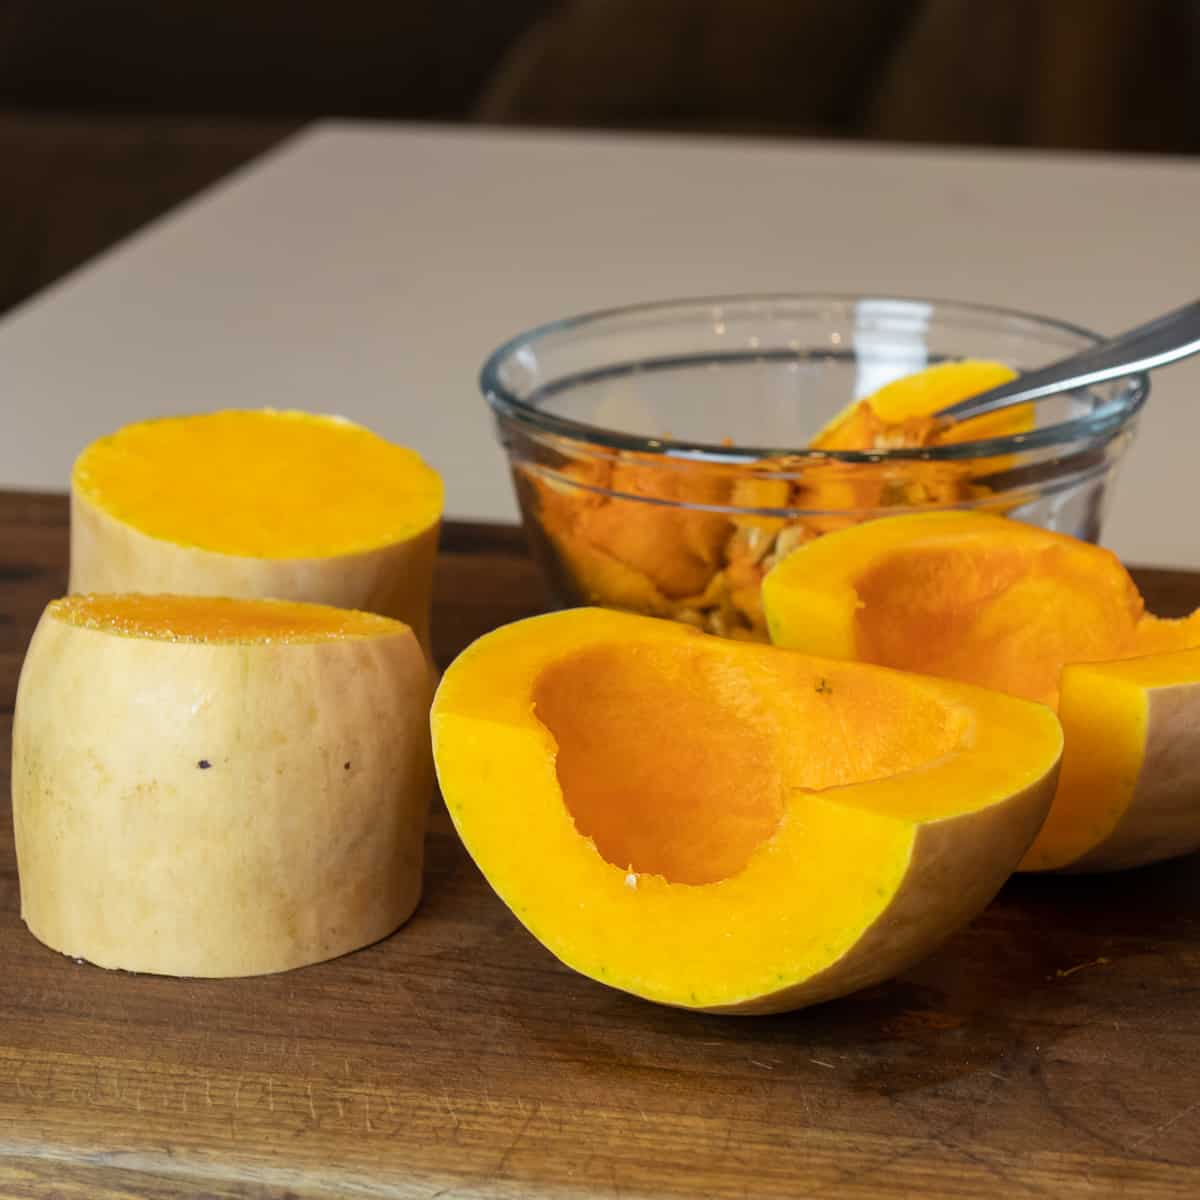 A butternut squash cut into portions.